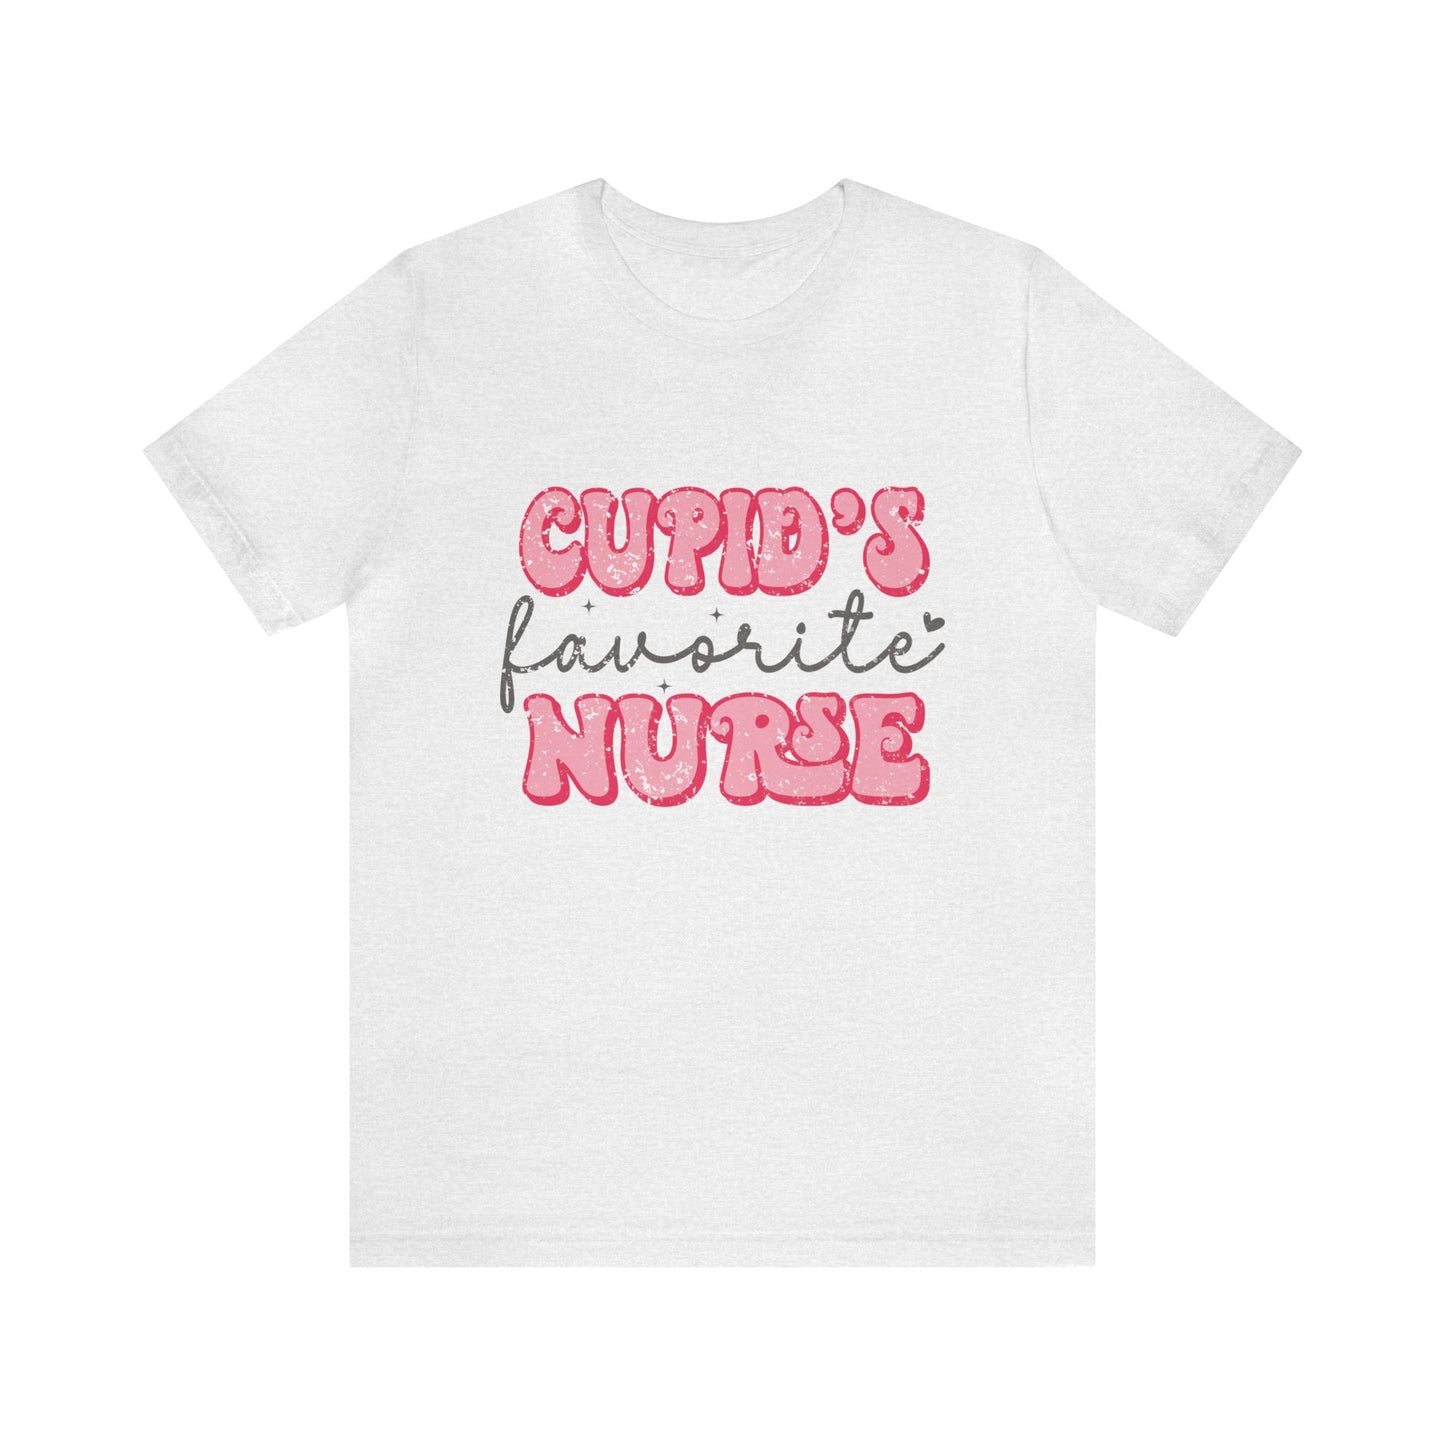 Cupid's Favorite Nurse Women's Tshirt